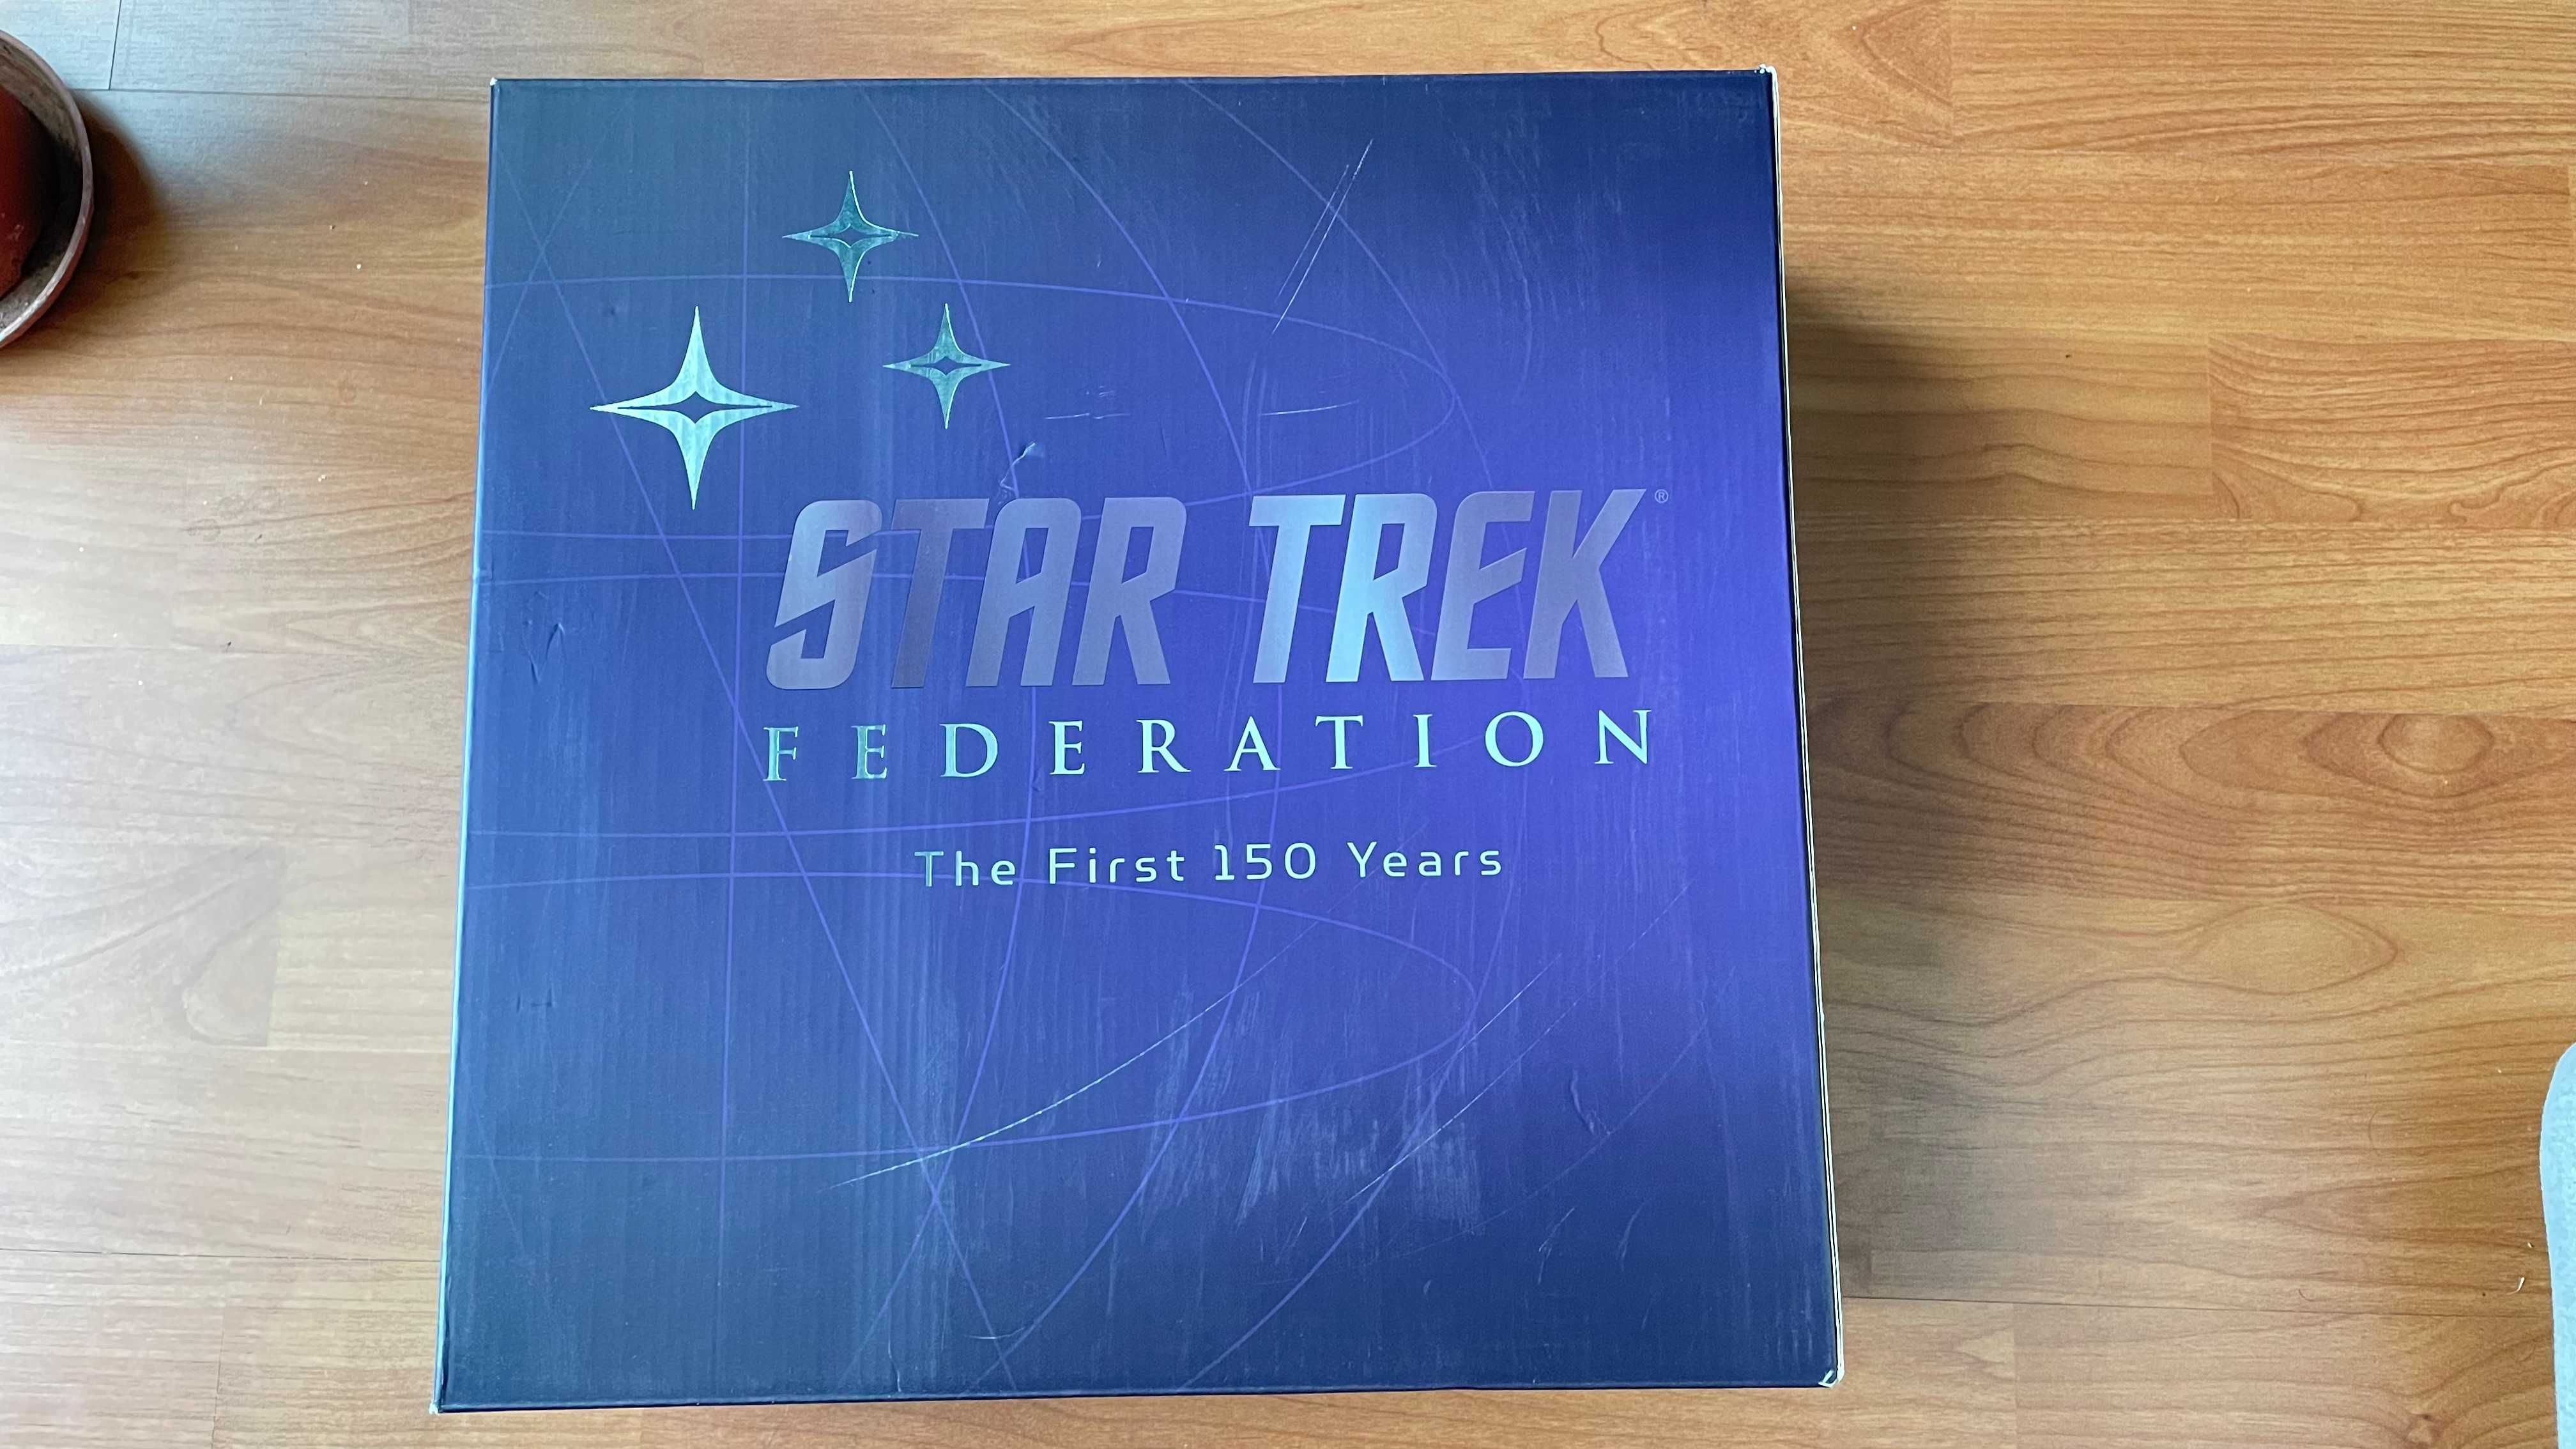 Livro "Star Trek Federation - First 150 Years" com extras